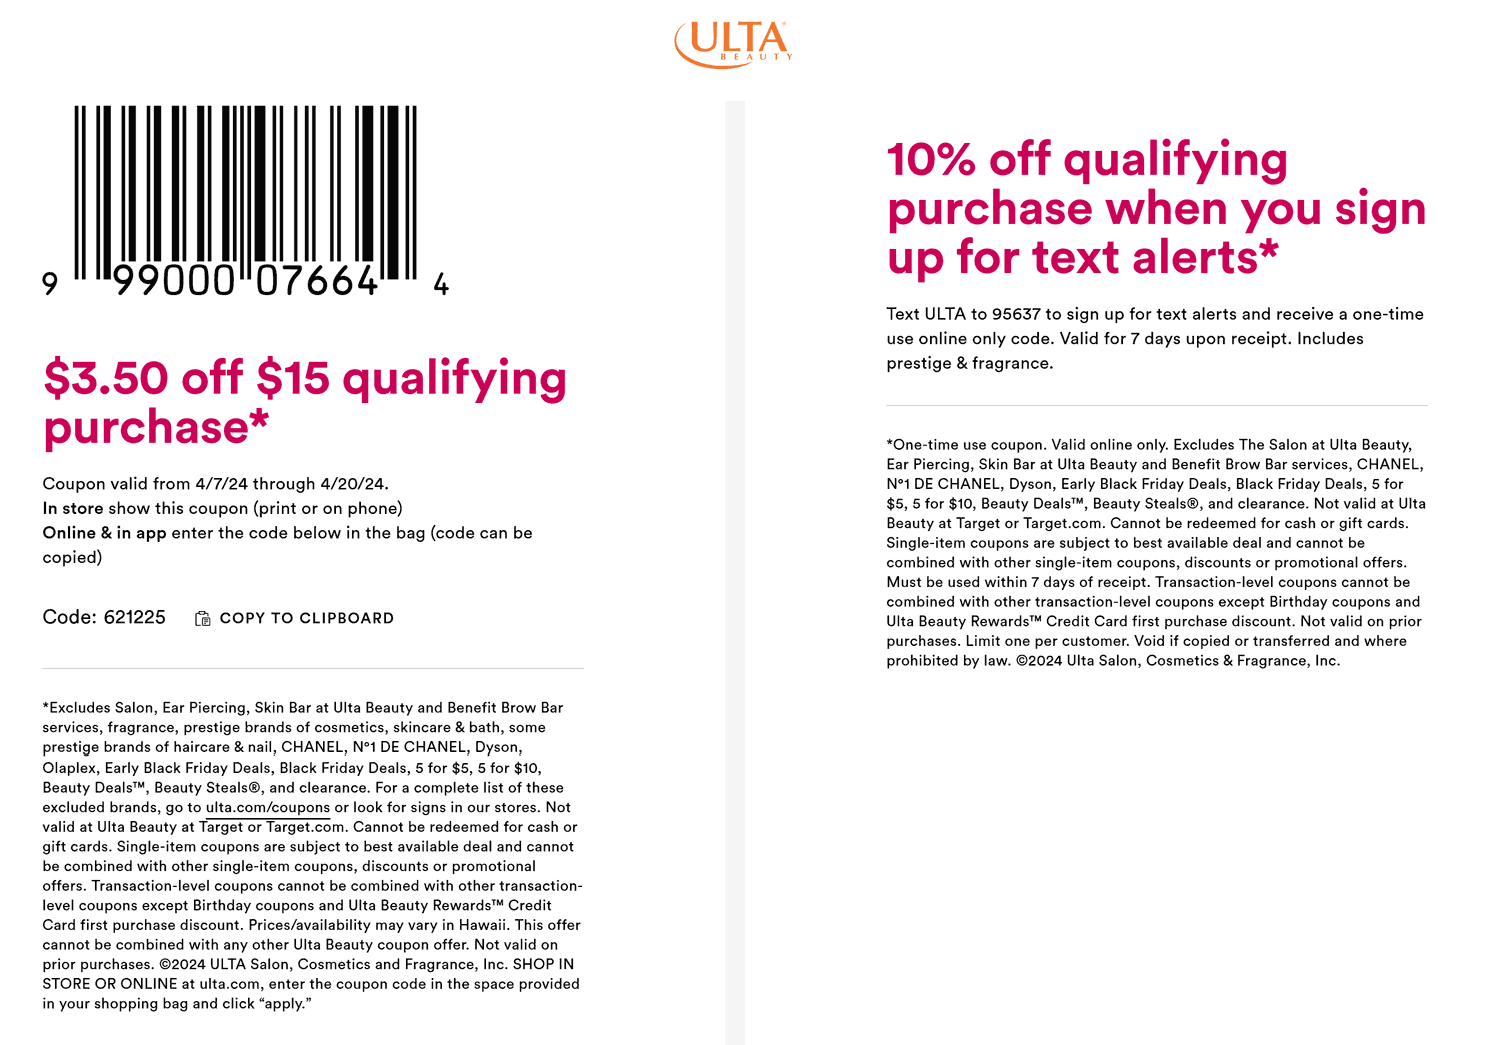 Ulta stores Coupon  $3.50 off $15 at Ulta Beauty, or online via promo code 621225 #ulta 